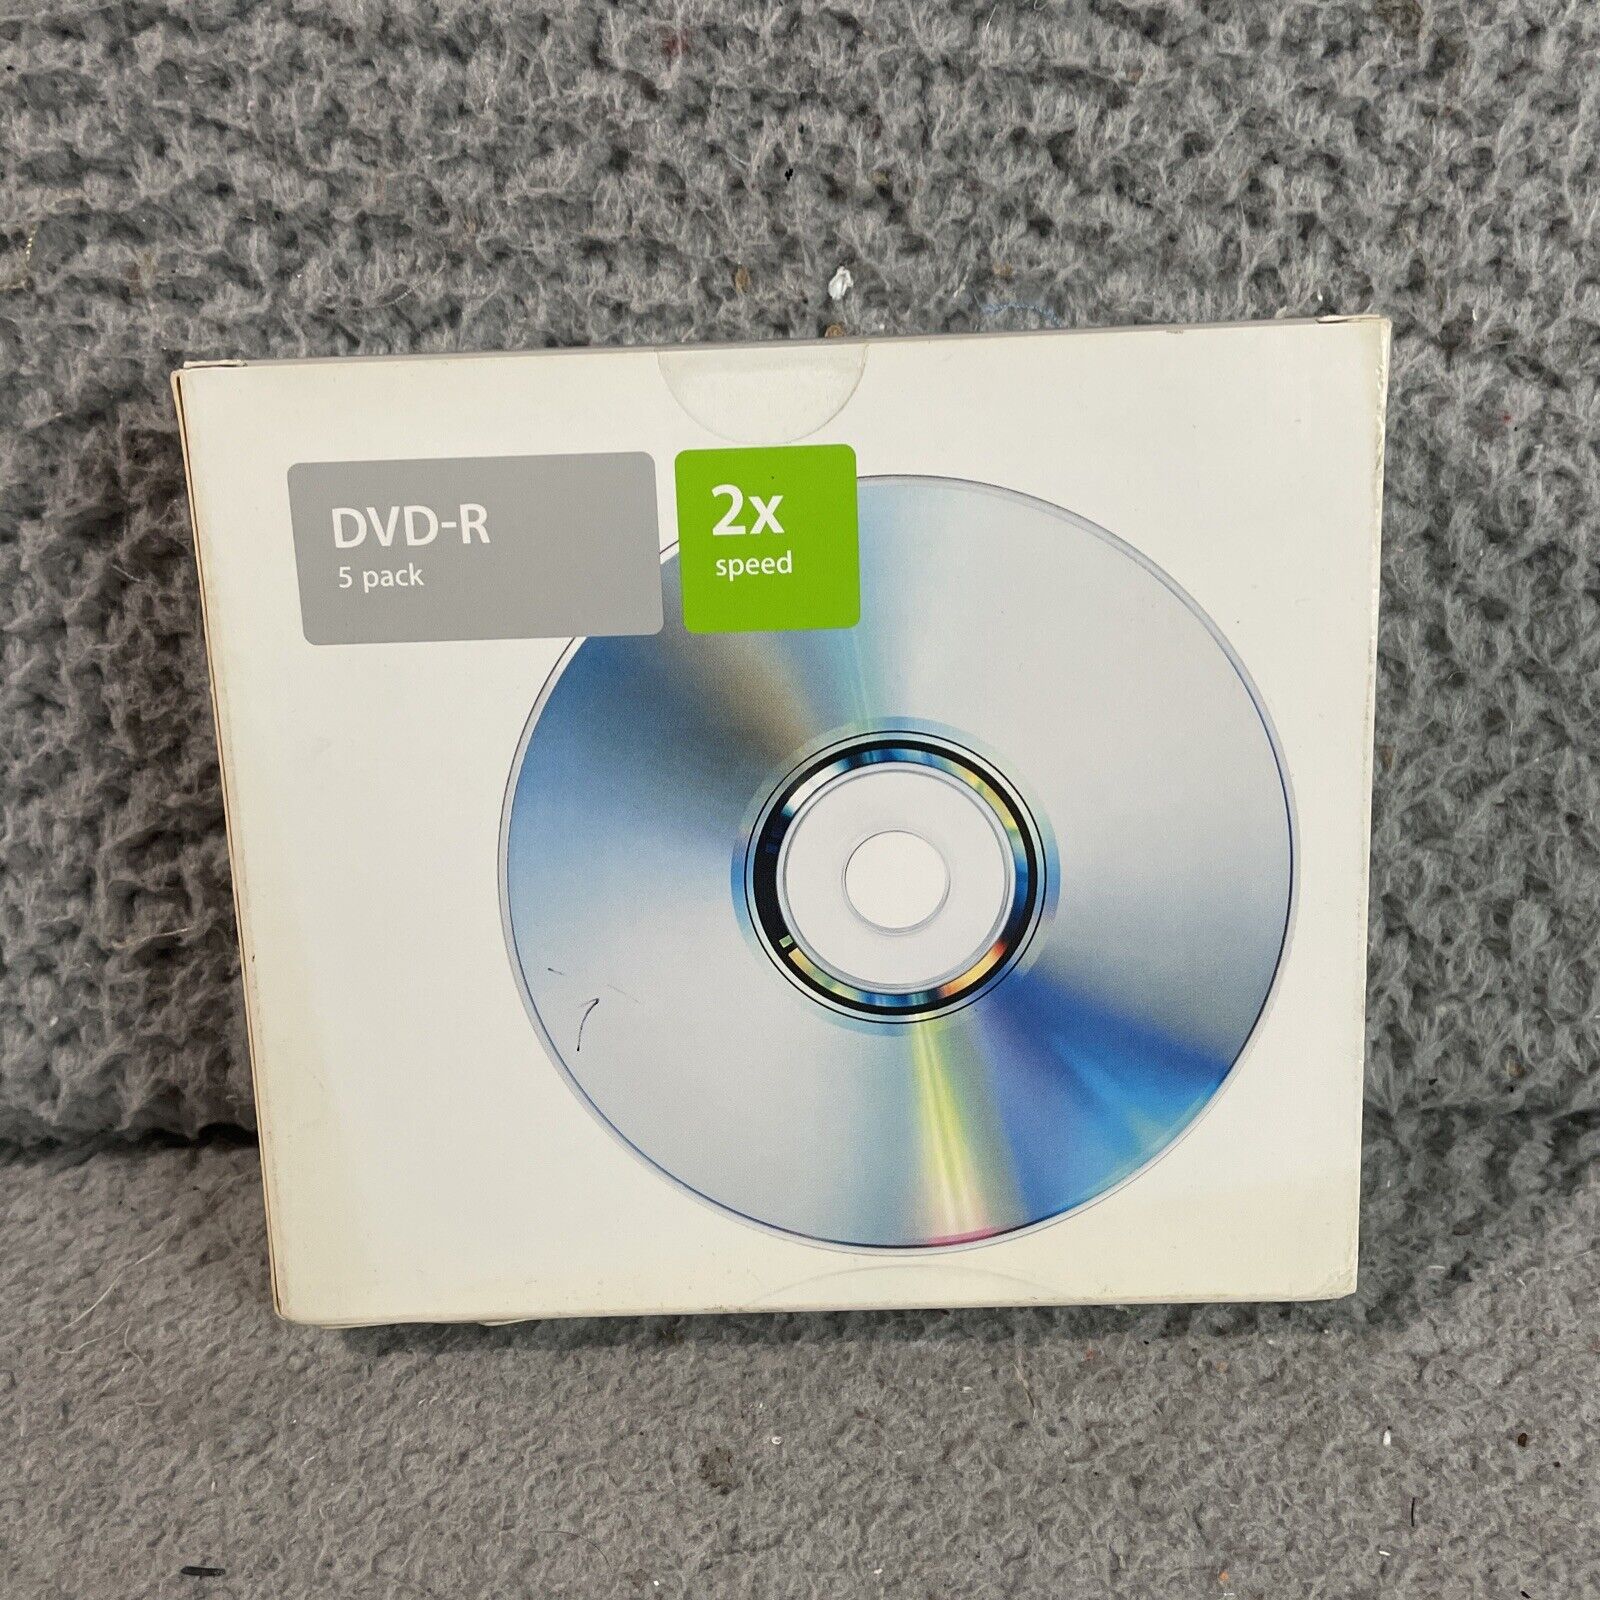 Apple DVD-R 5 Pack 2x Speed 4.7 GB 120 min Media Discs Sealed Original Nostalgic